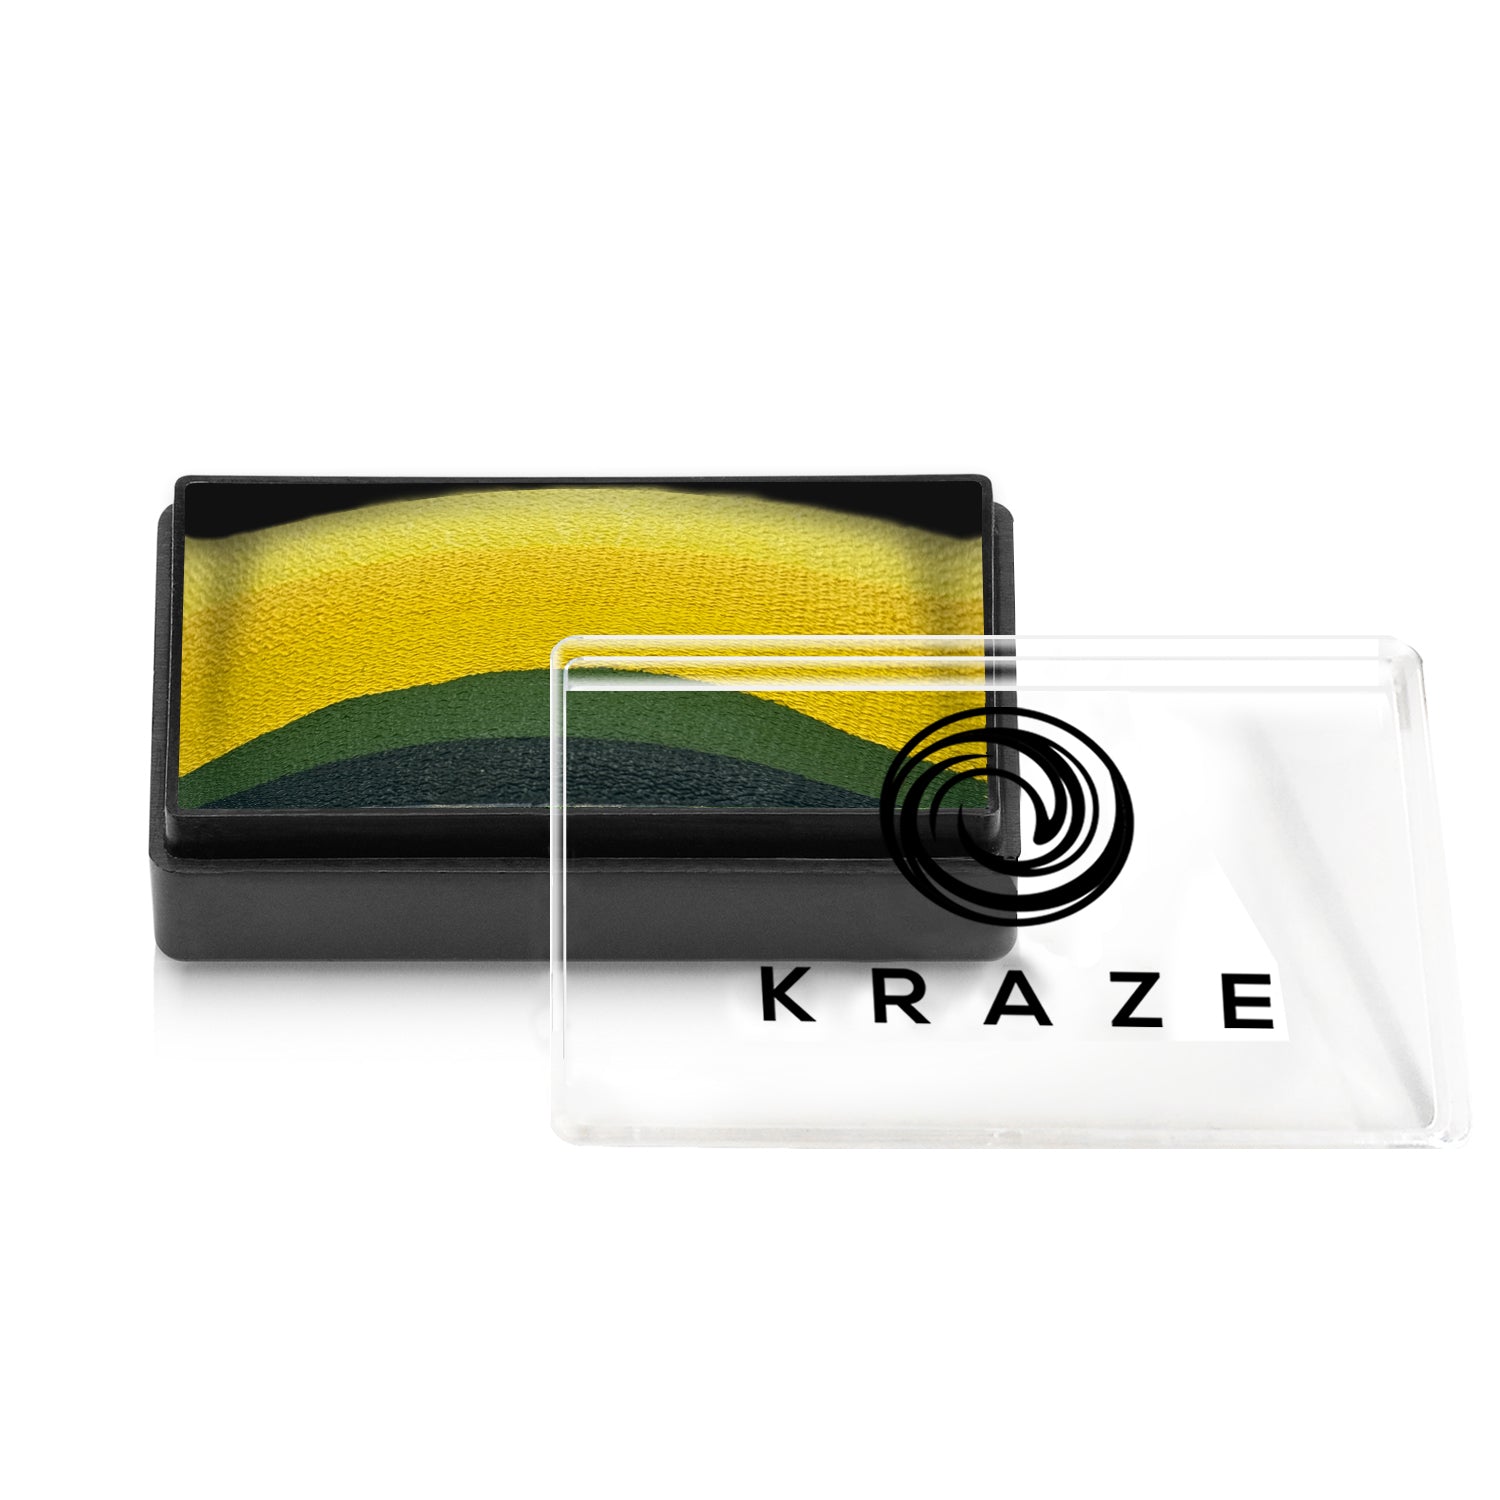 Kraze FX Dome Stroke by Linnea Novak - Winter Leaf (25 gm)